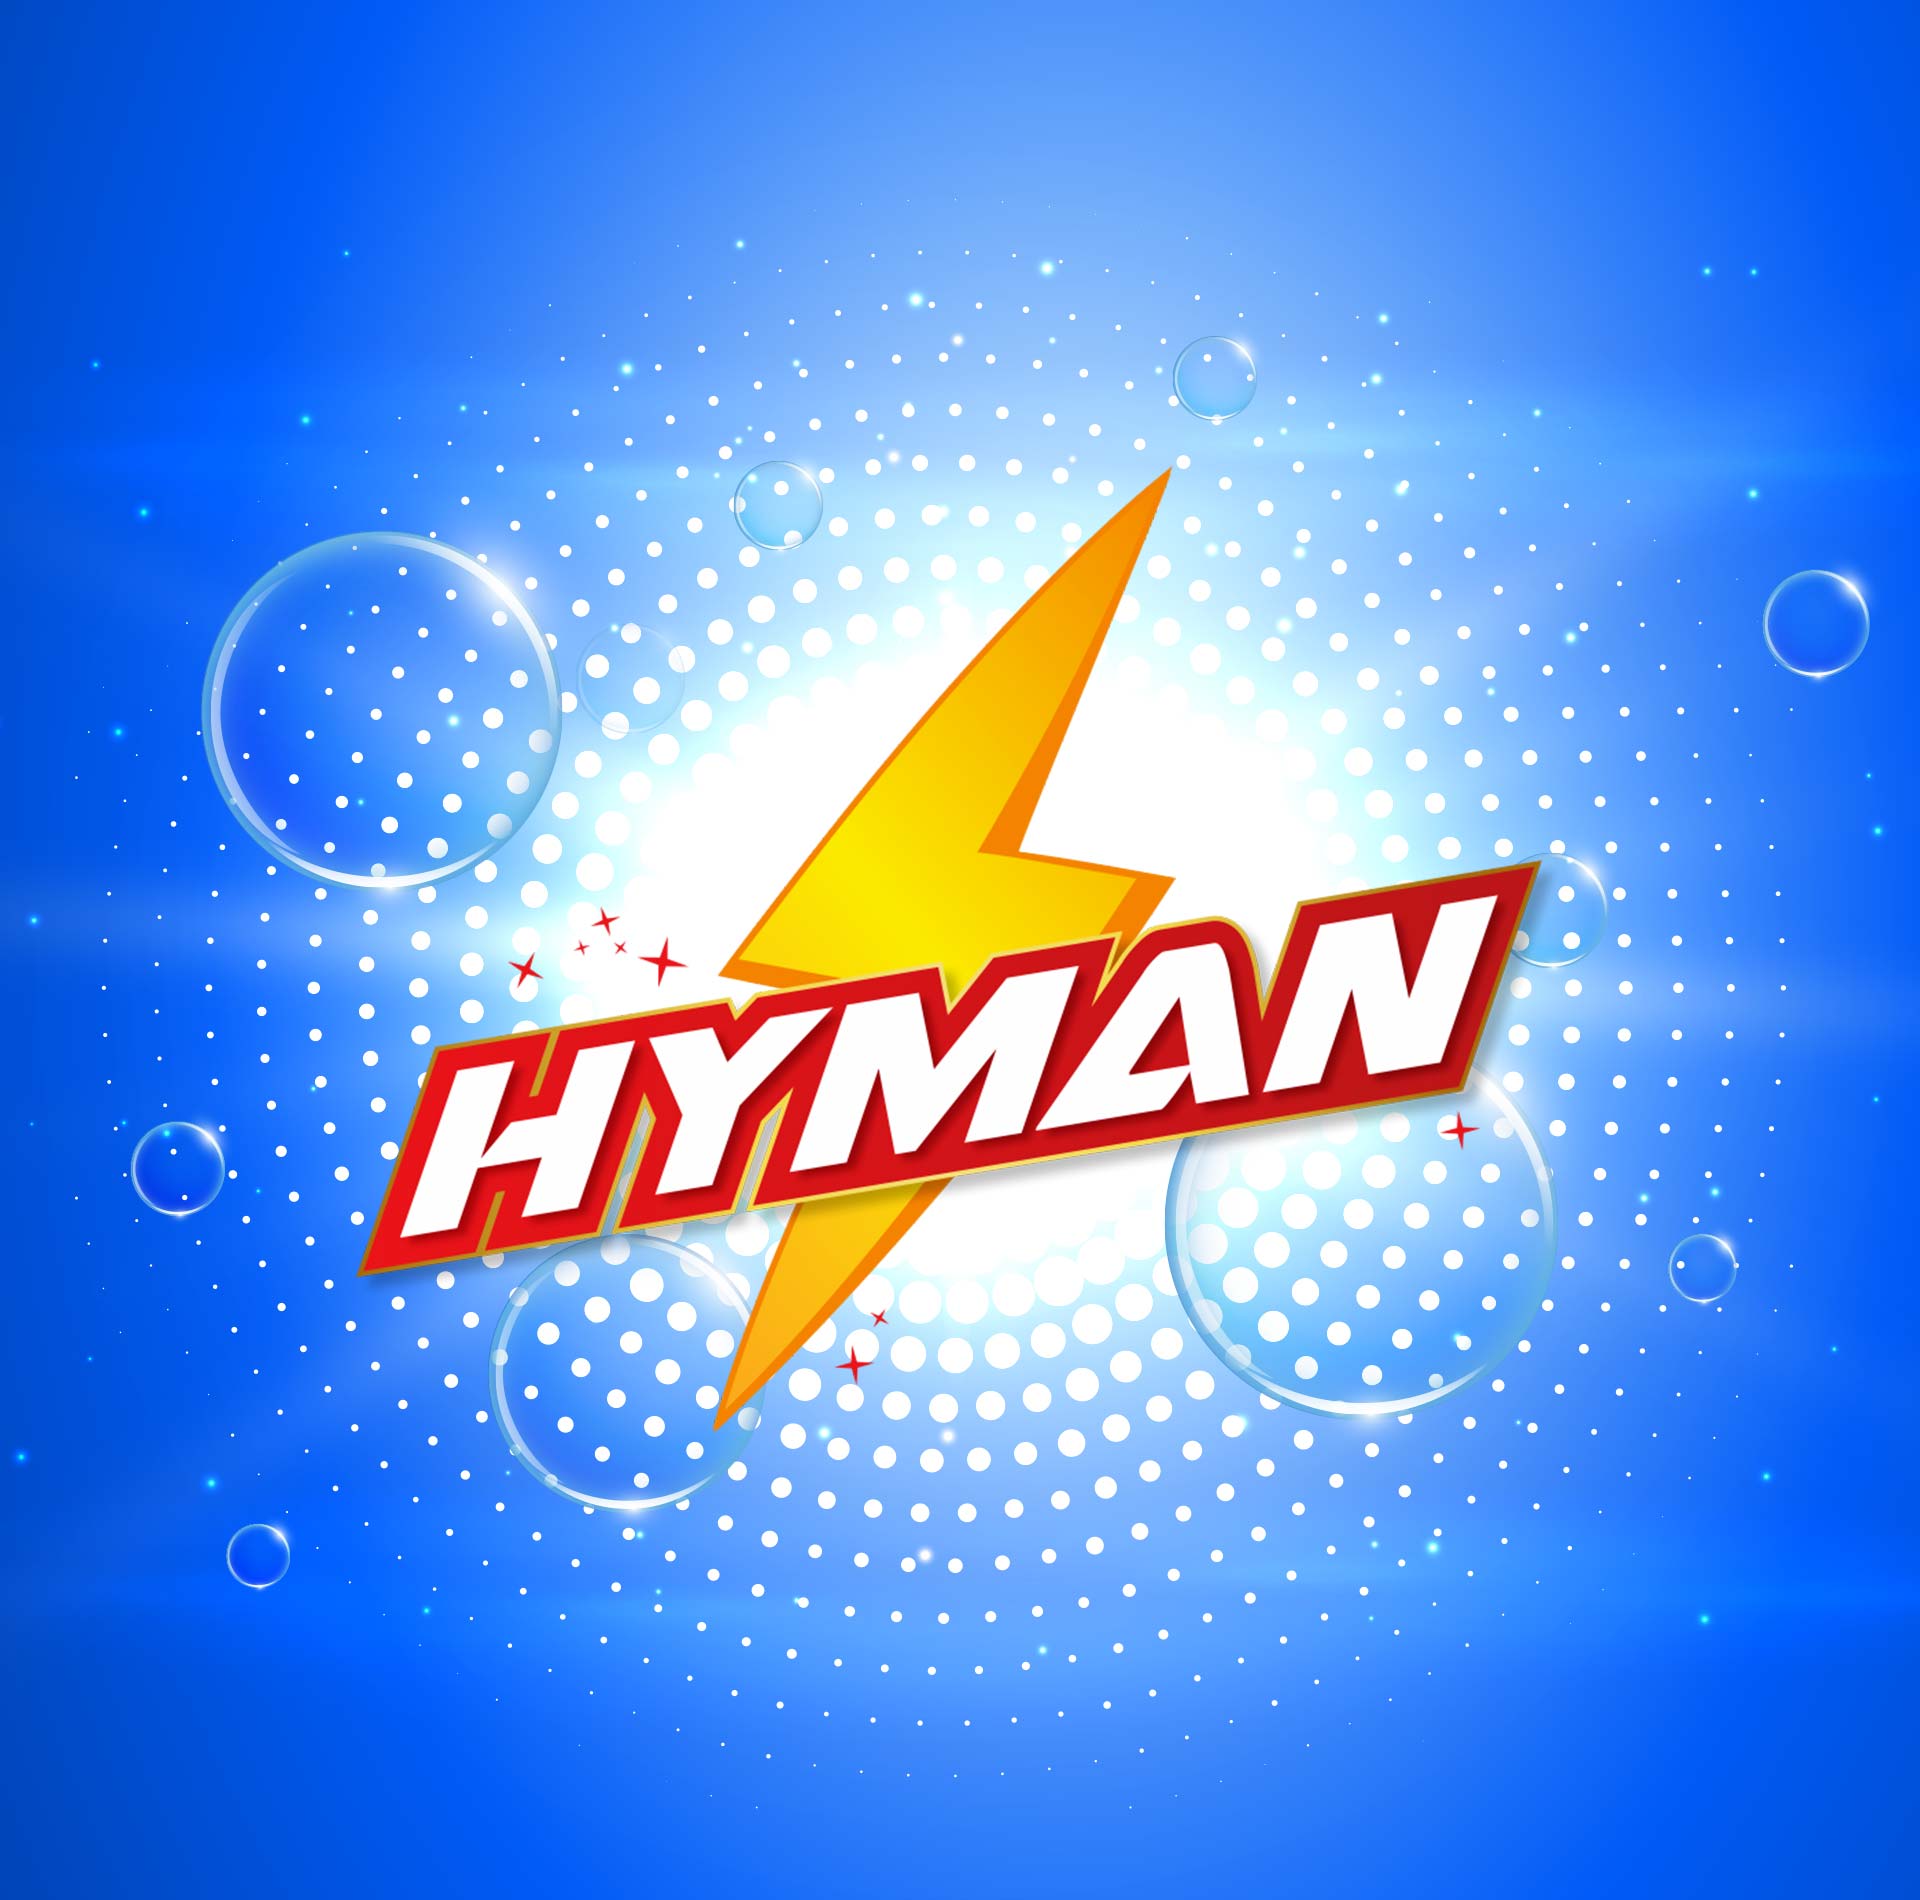 Hyman